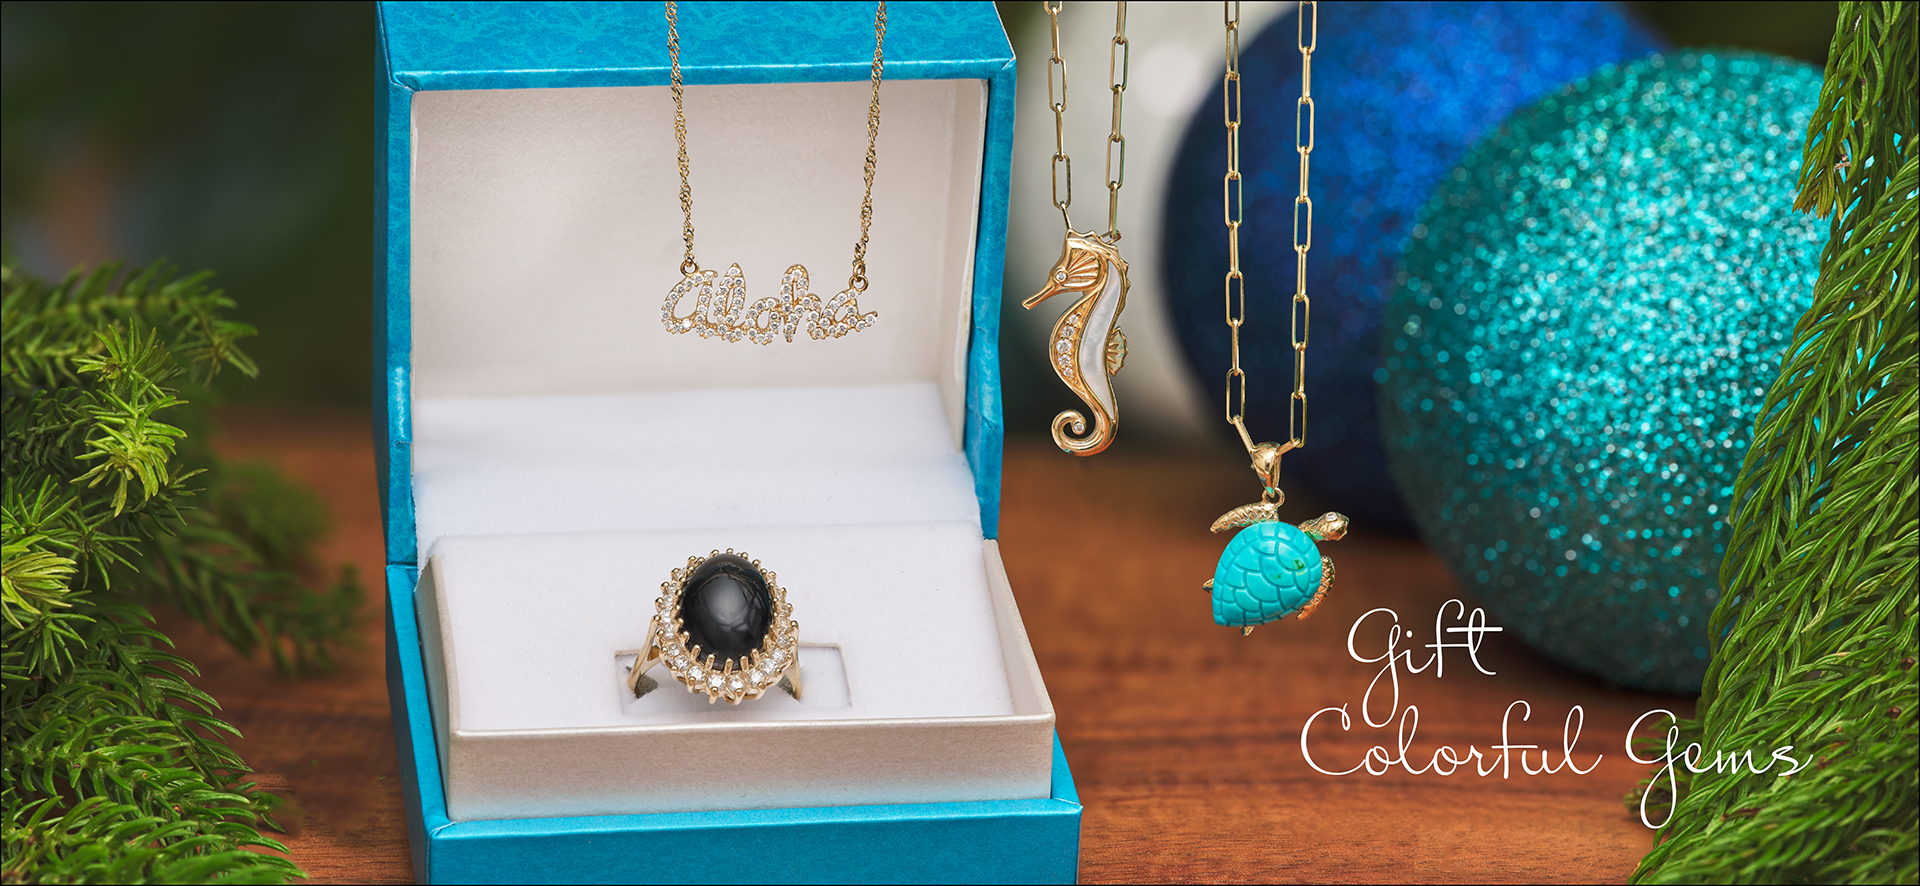 Shop Gemstone Jewelry - Holiday Gifts - Hawaiian Jewelry